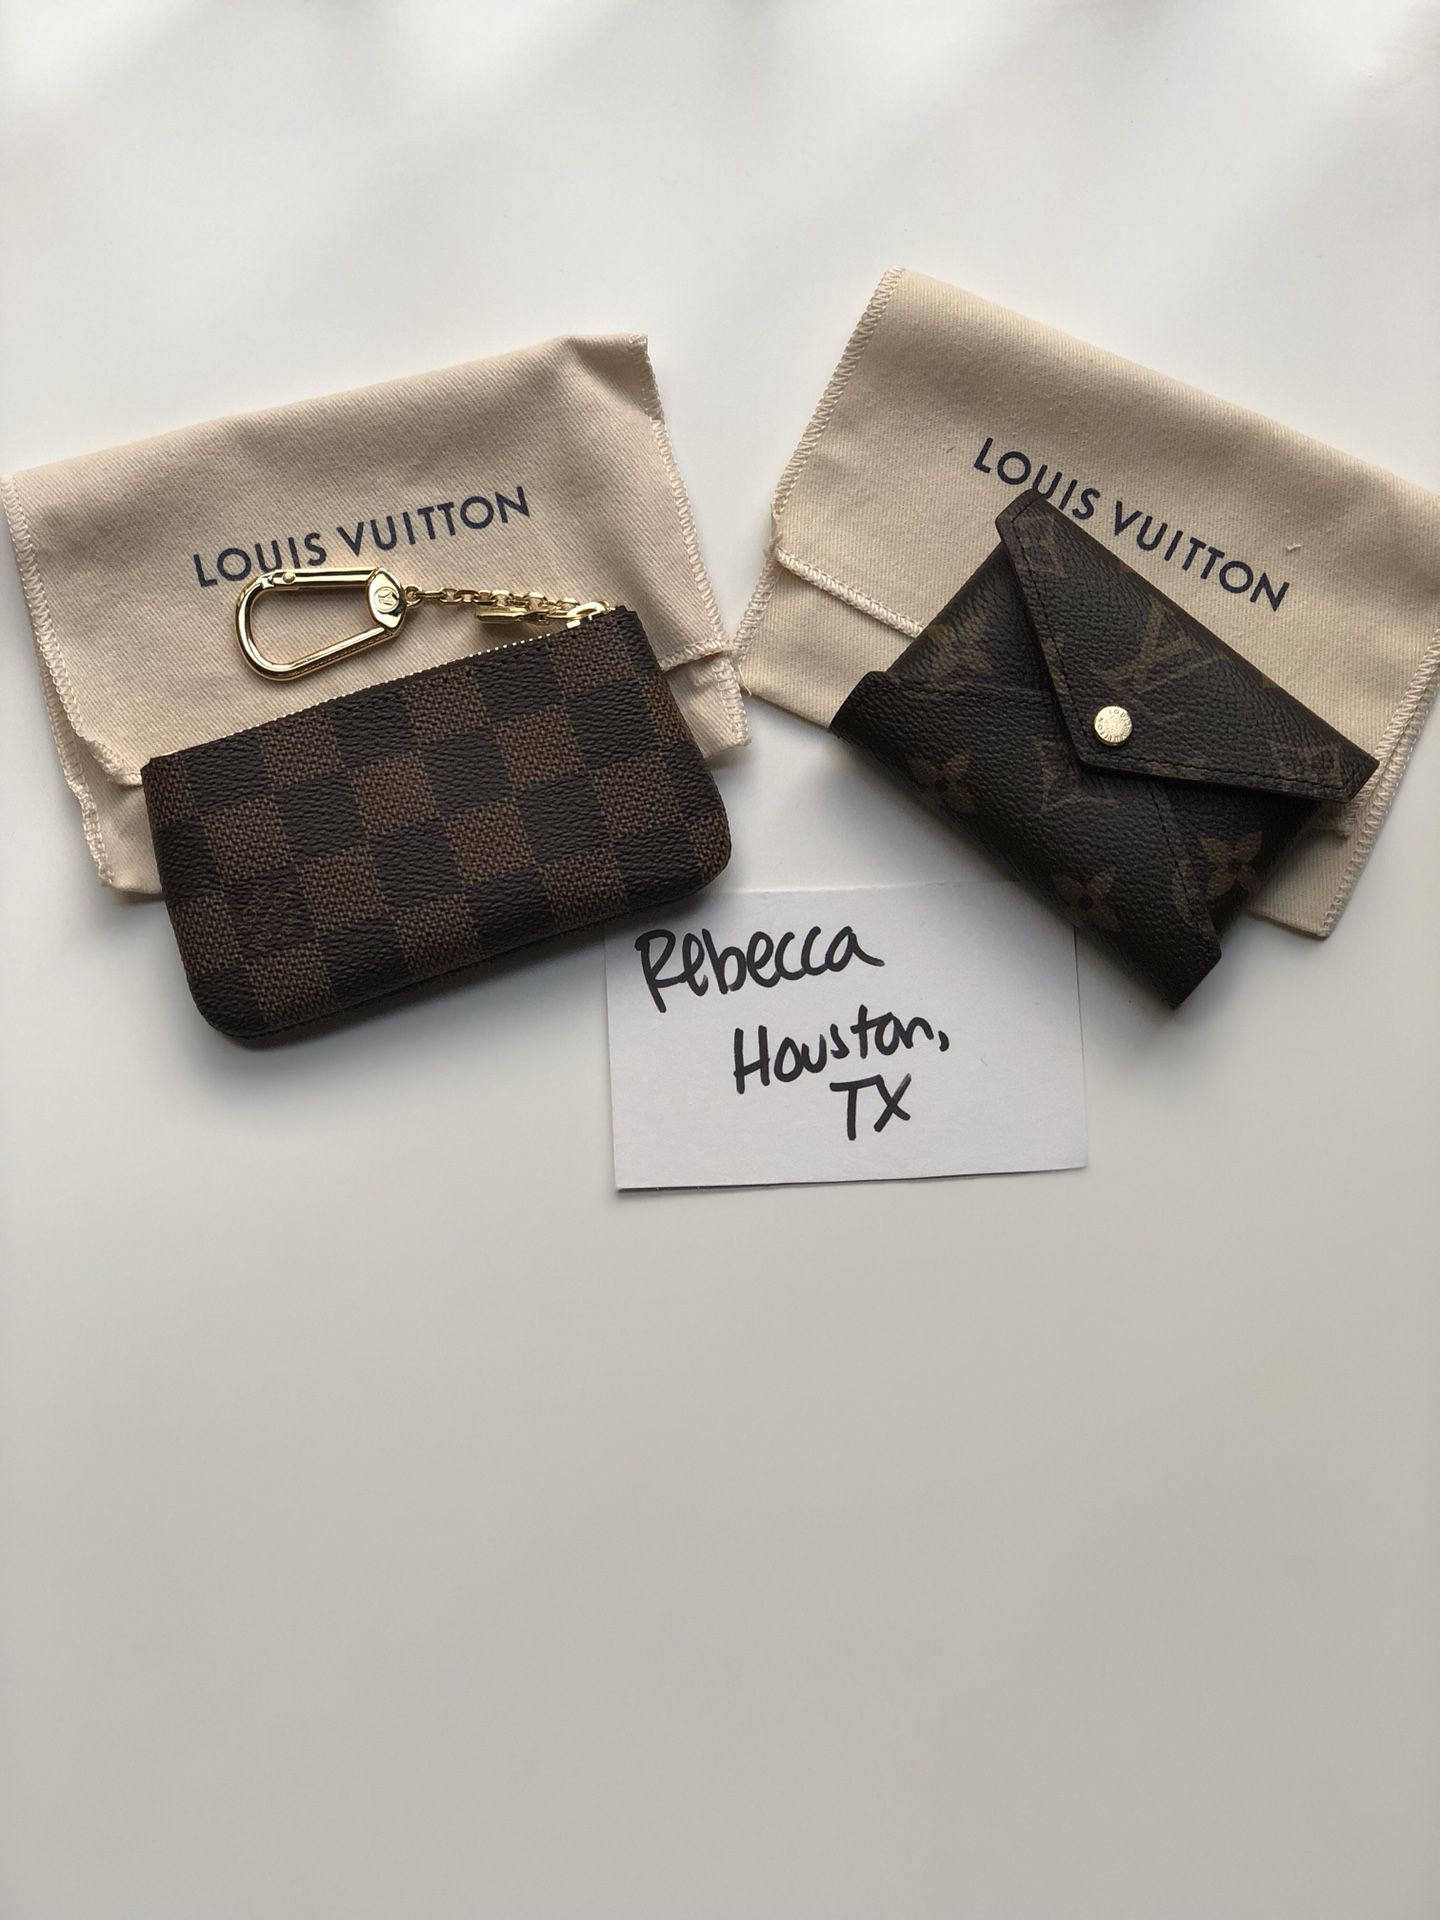 Authentic Louis Vuitton SLG bundle for Sale in Houston, TX - OfferUp